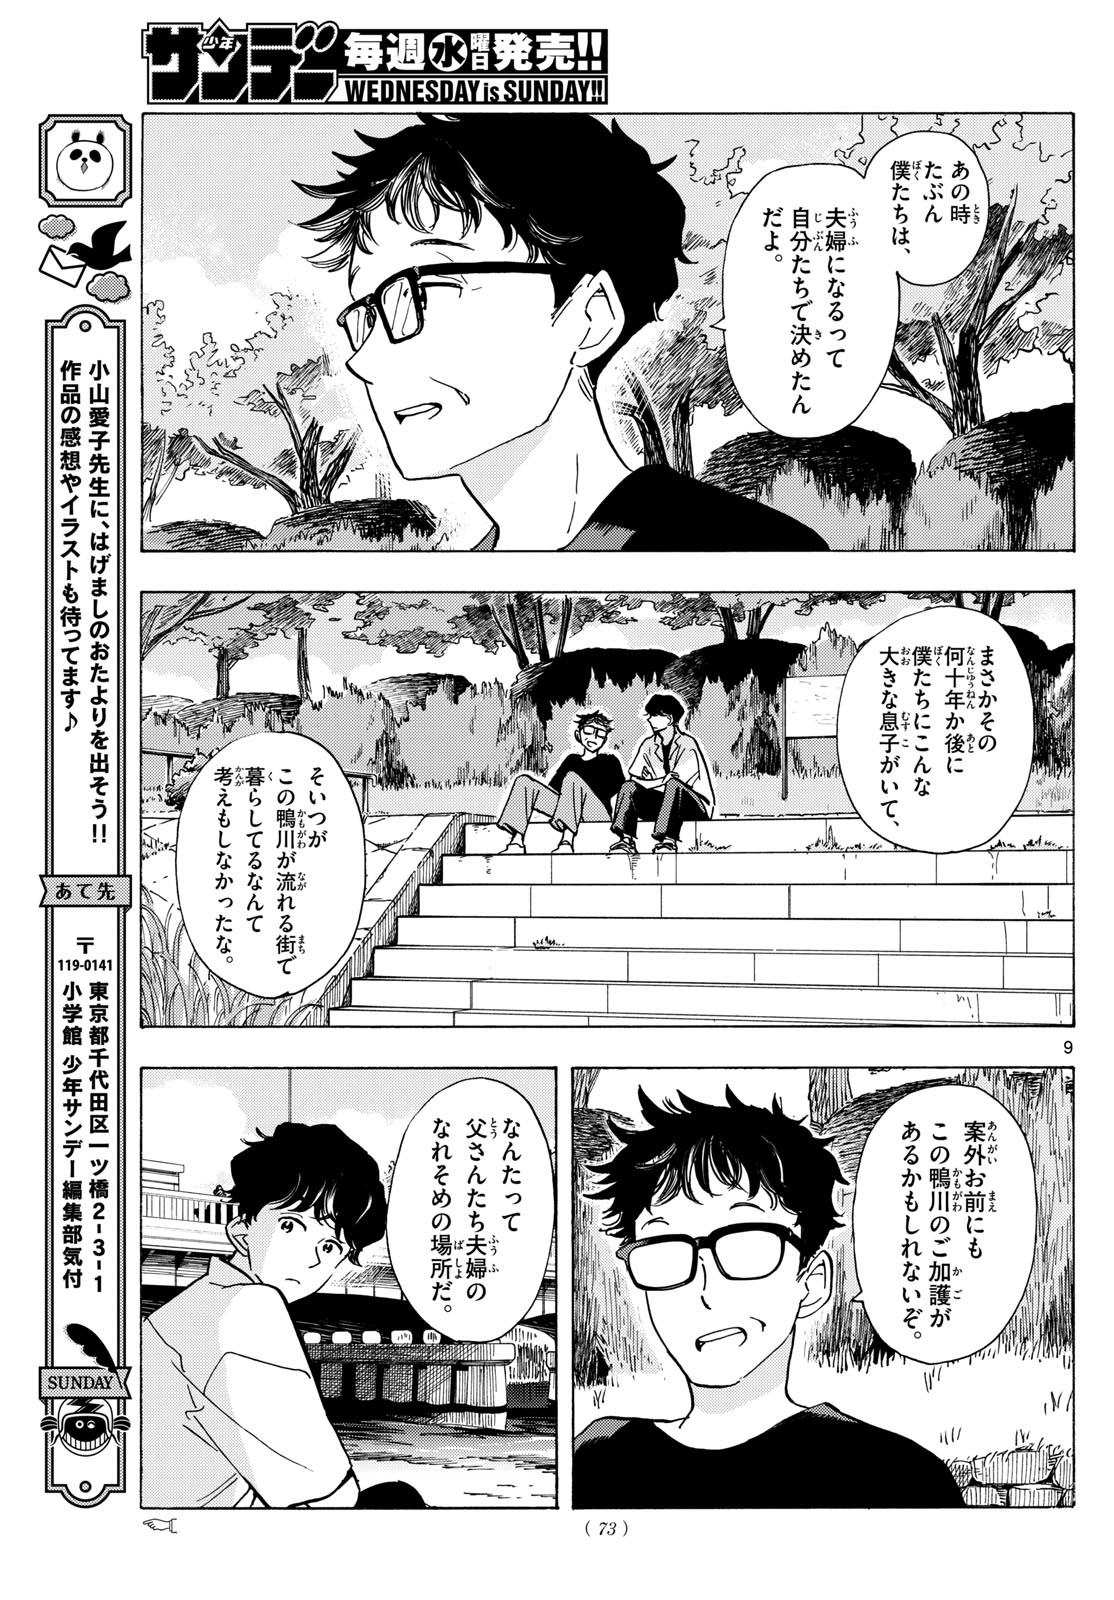 Maiko-san Chi no Makanai-san - Chapter 307 - Page 9